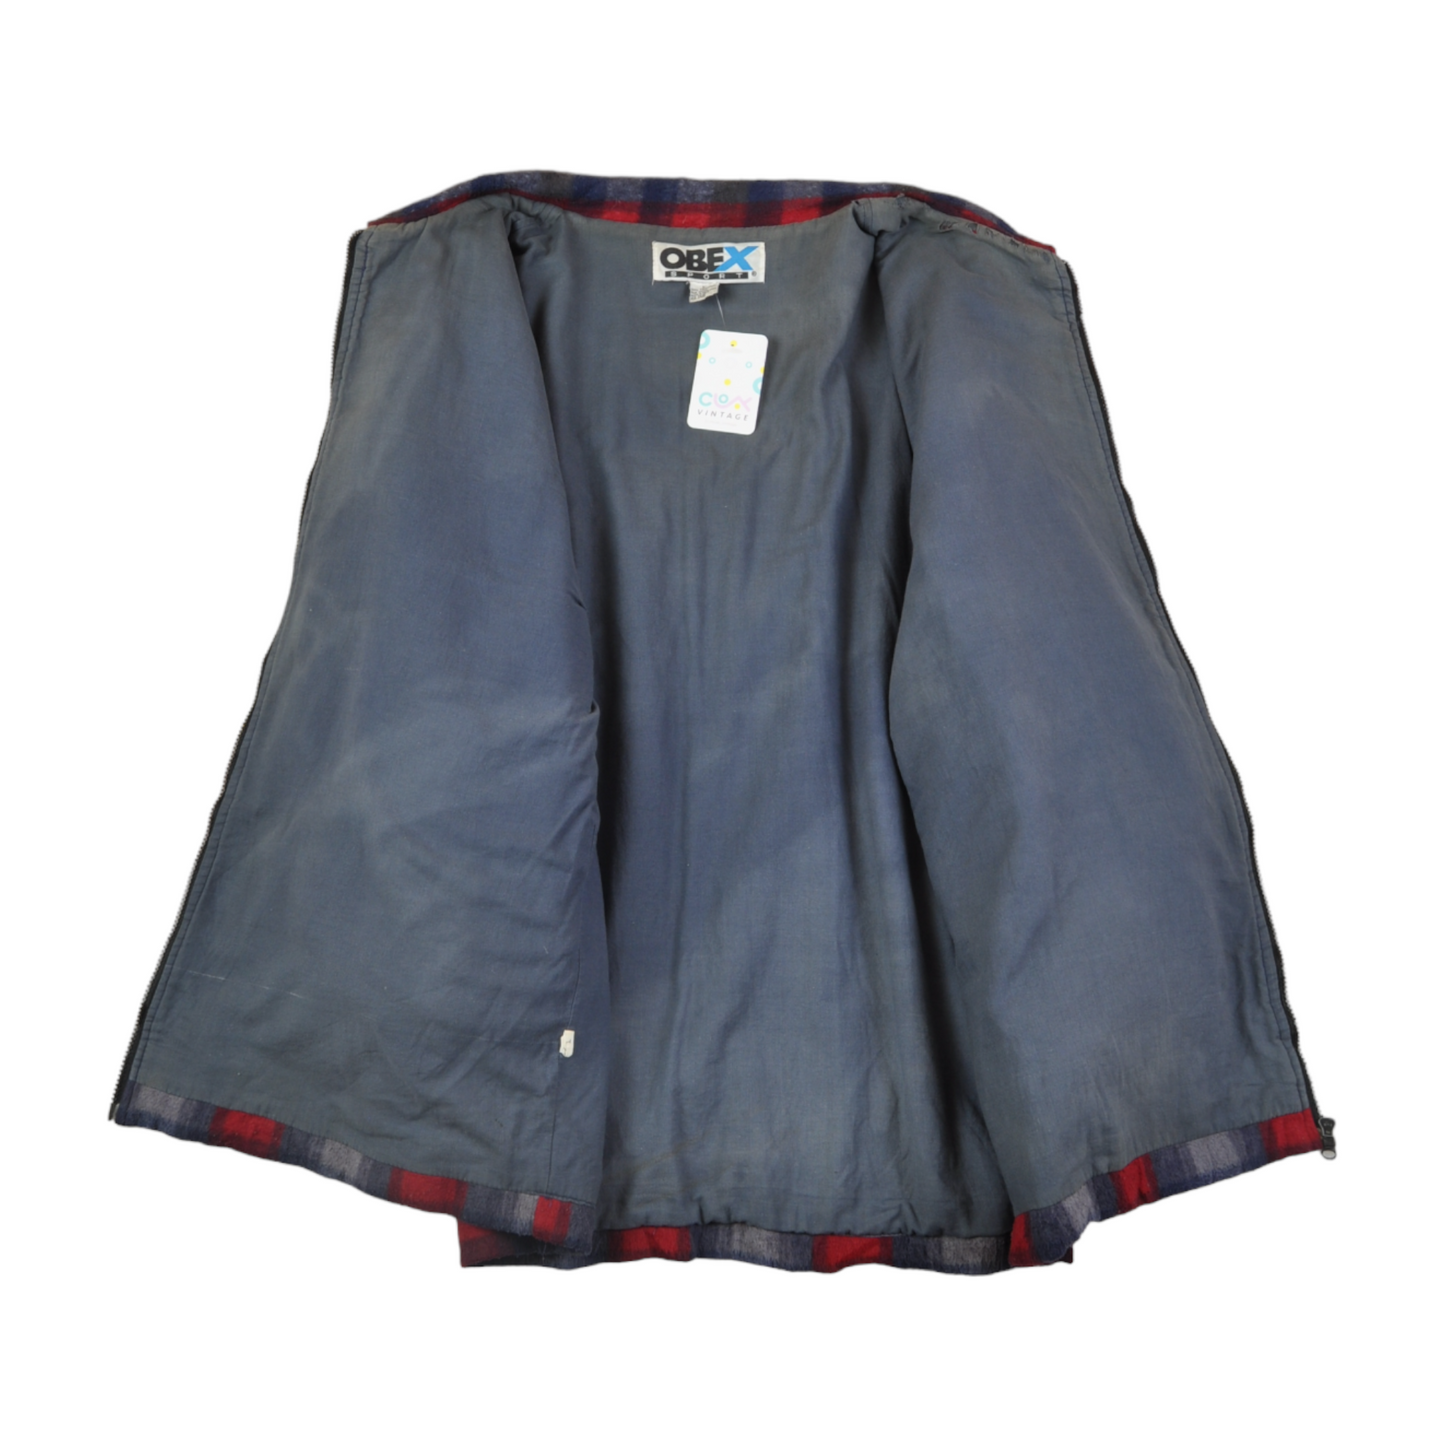 Vintage Fleece Jacket Retro Checked Pattern Red/Grey Large